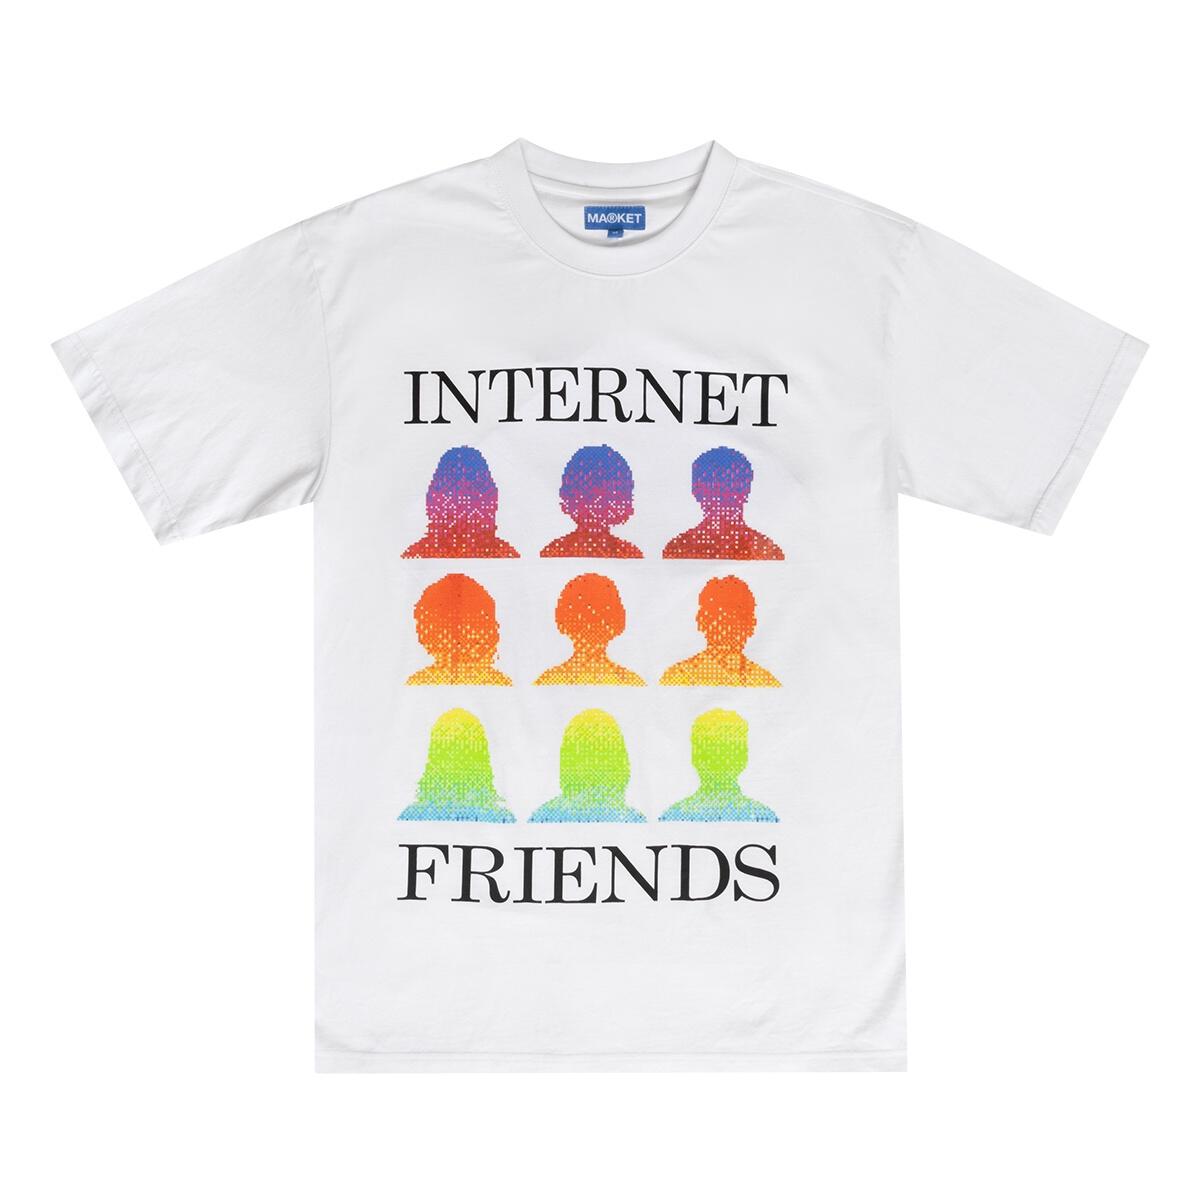 Internet Friend Tee - White